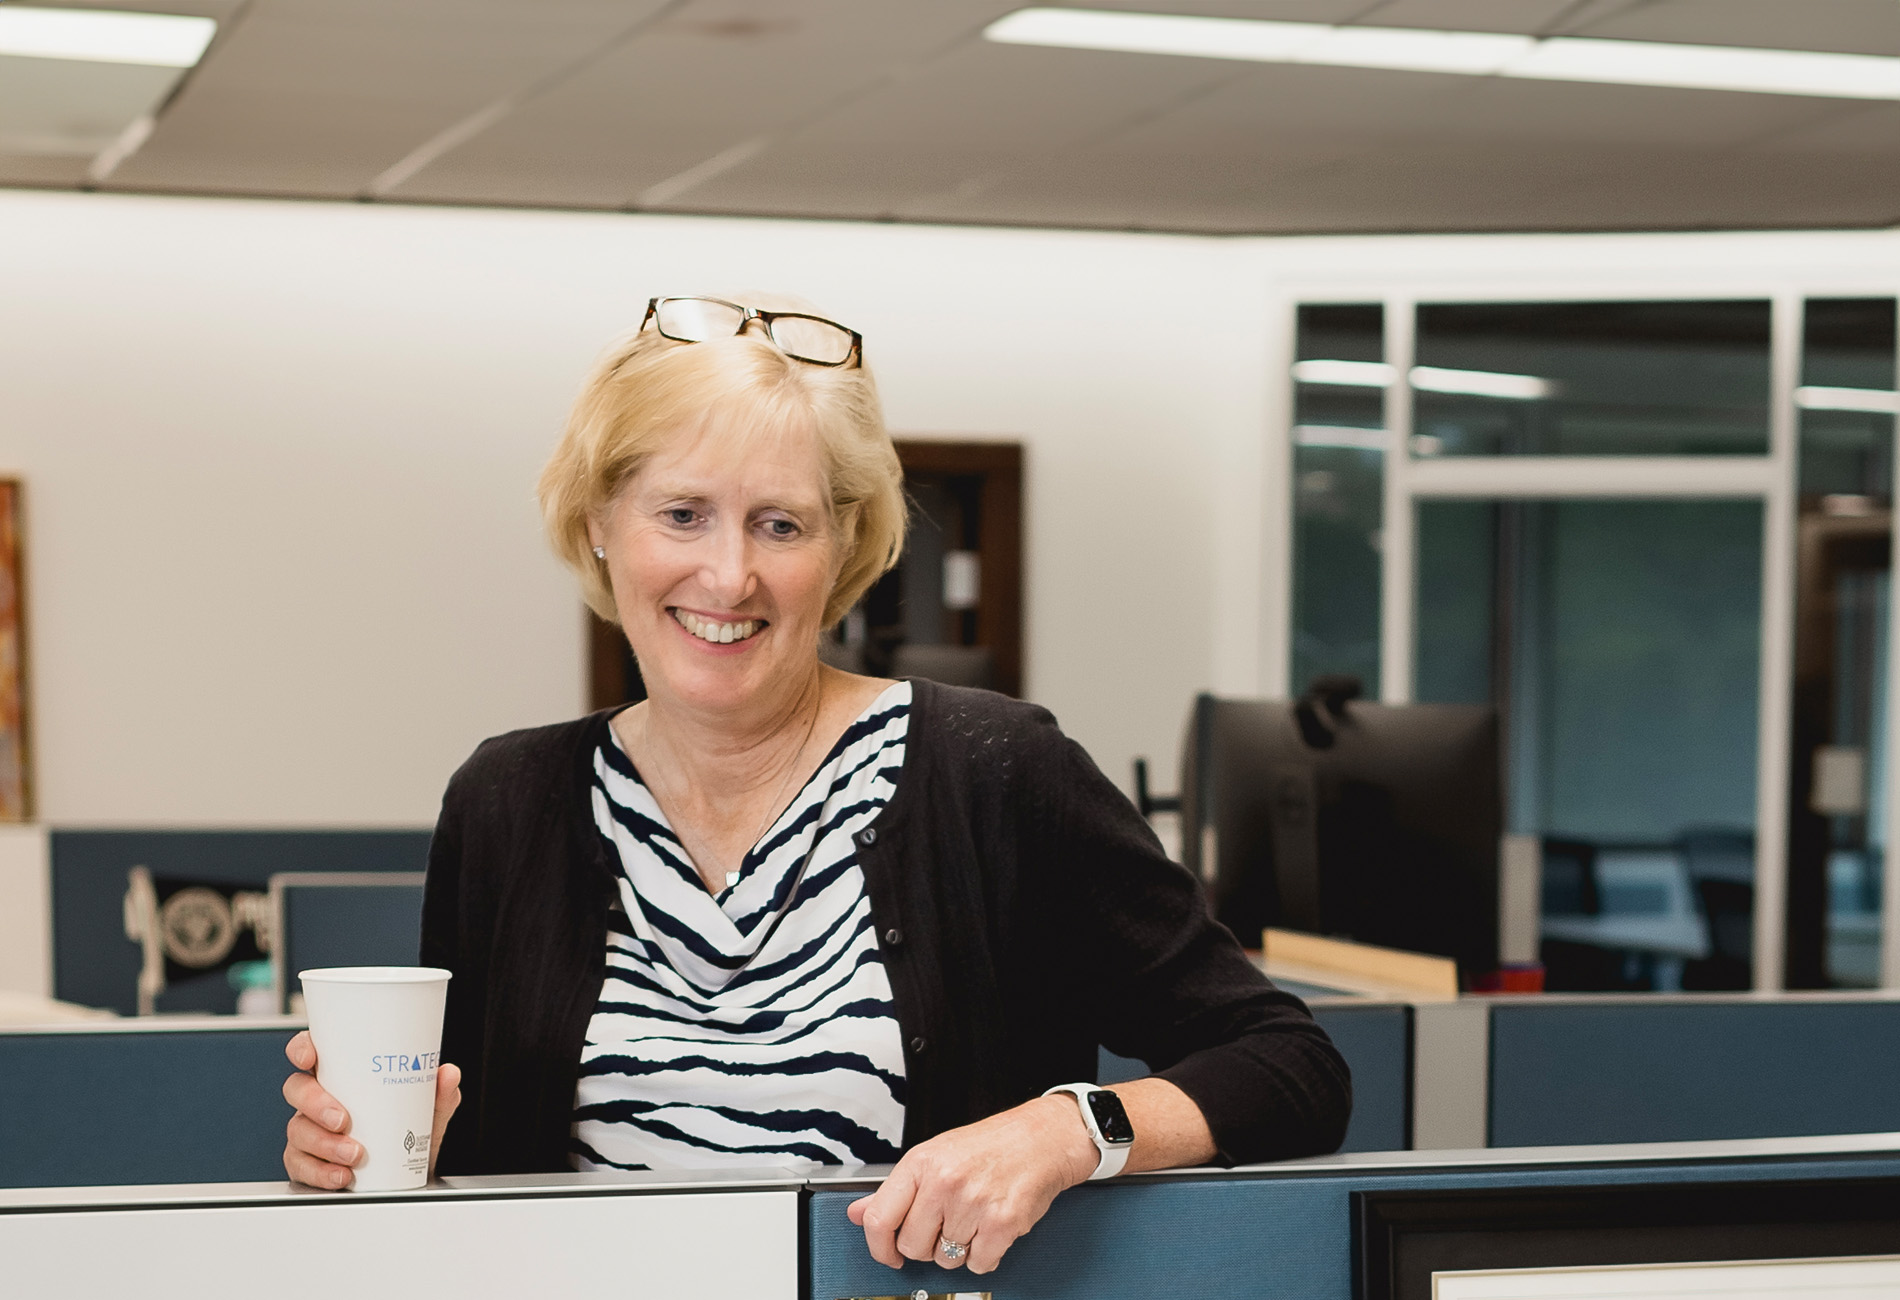 Judy Sweet CFA, Senior Financial Advisor, Female Financial Advisor, Partner: A woman with short blonde hair and glasses on her head.